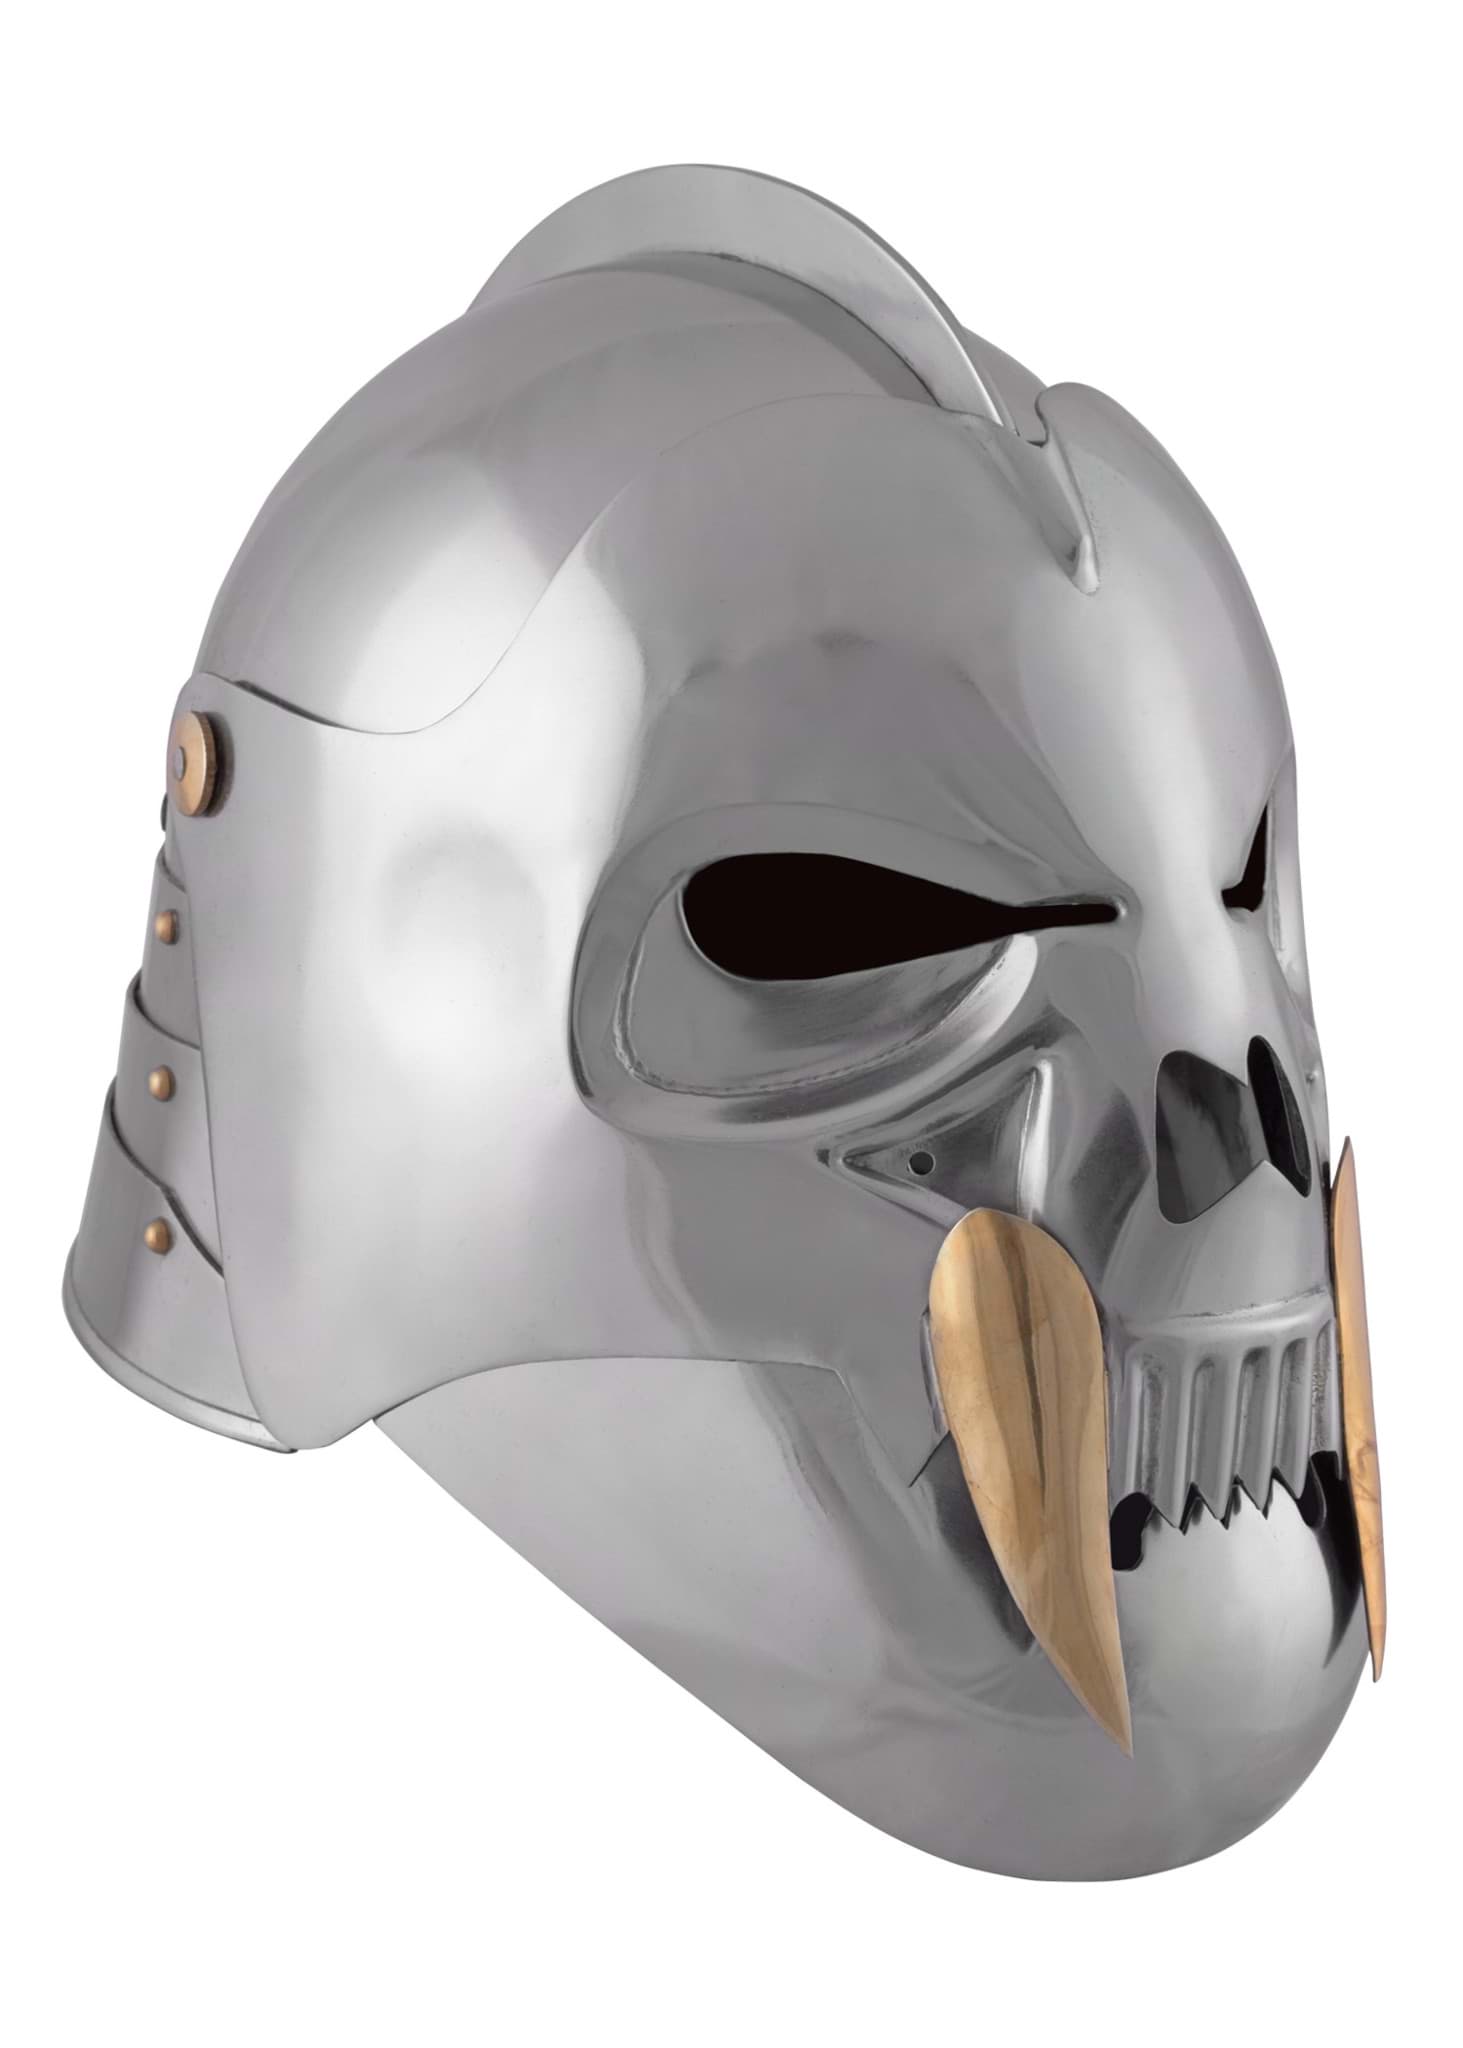 Immagine di Battle Merchant - Elmo maschere orco in acciaio